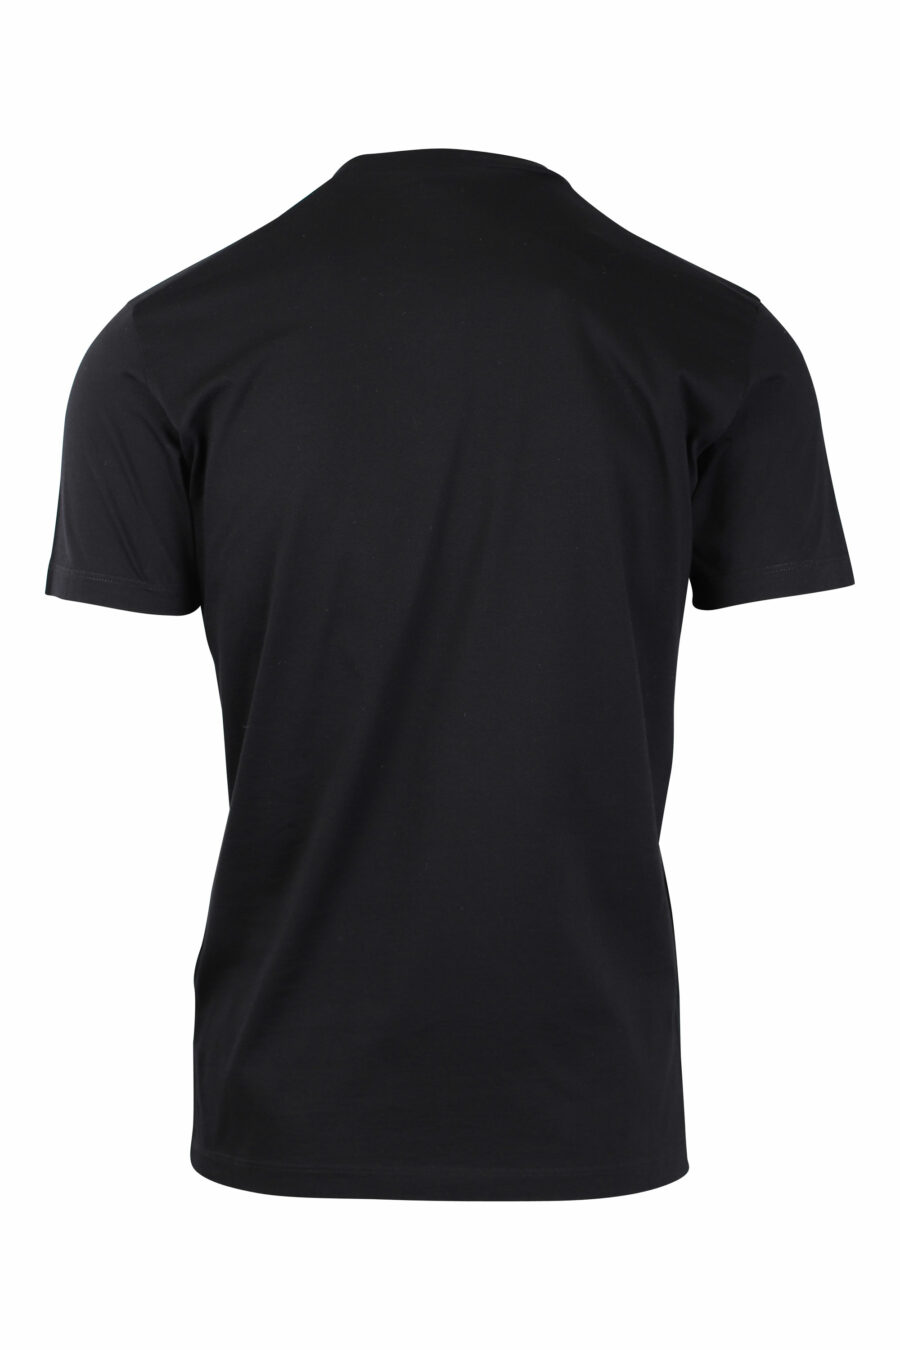 T-shirt noir avec imprimé bob marley - IMG 1480